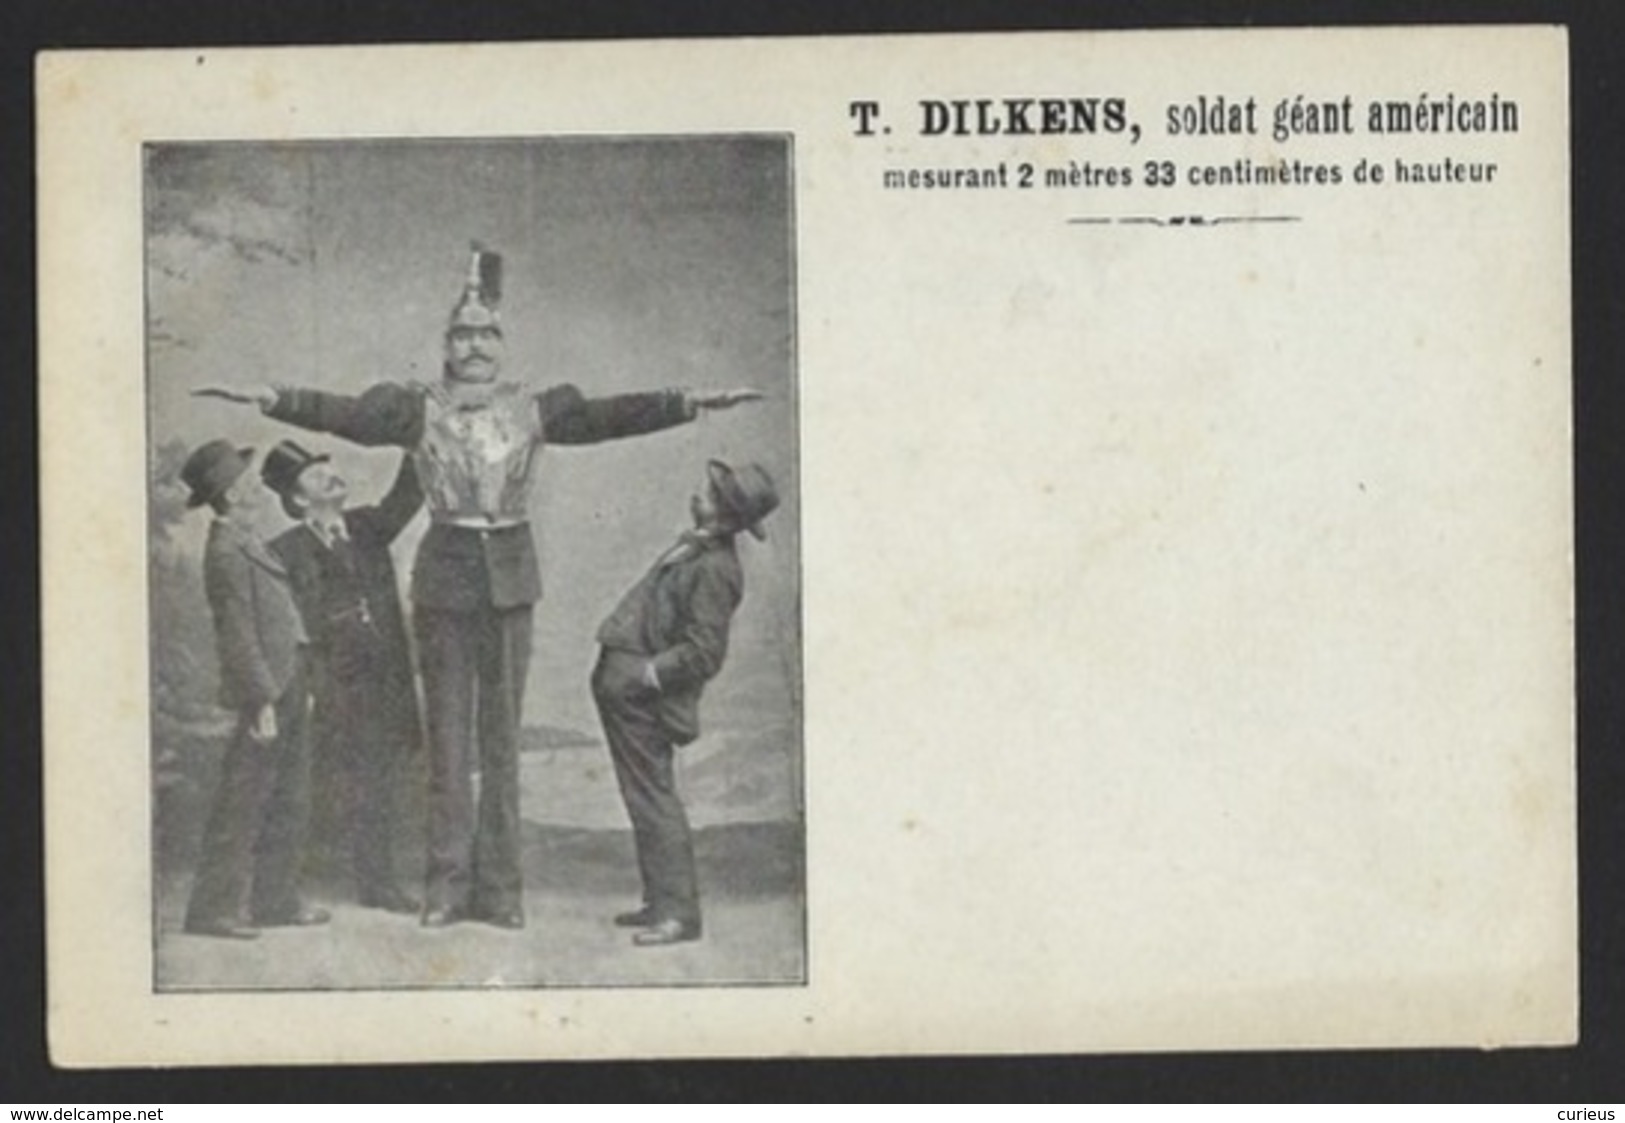 T. DILKENS * GEANT AMERICAN SOLDIER * MESURE 2,33 * REUS * SOLDAT GEANT AMERICAIN * FREAK SHOW * CIRCUS - Cirque